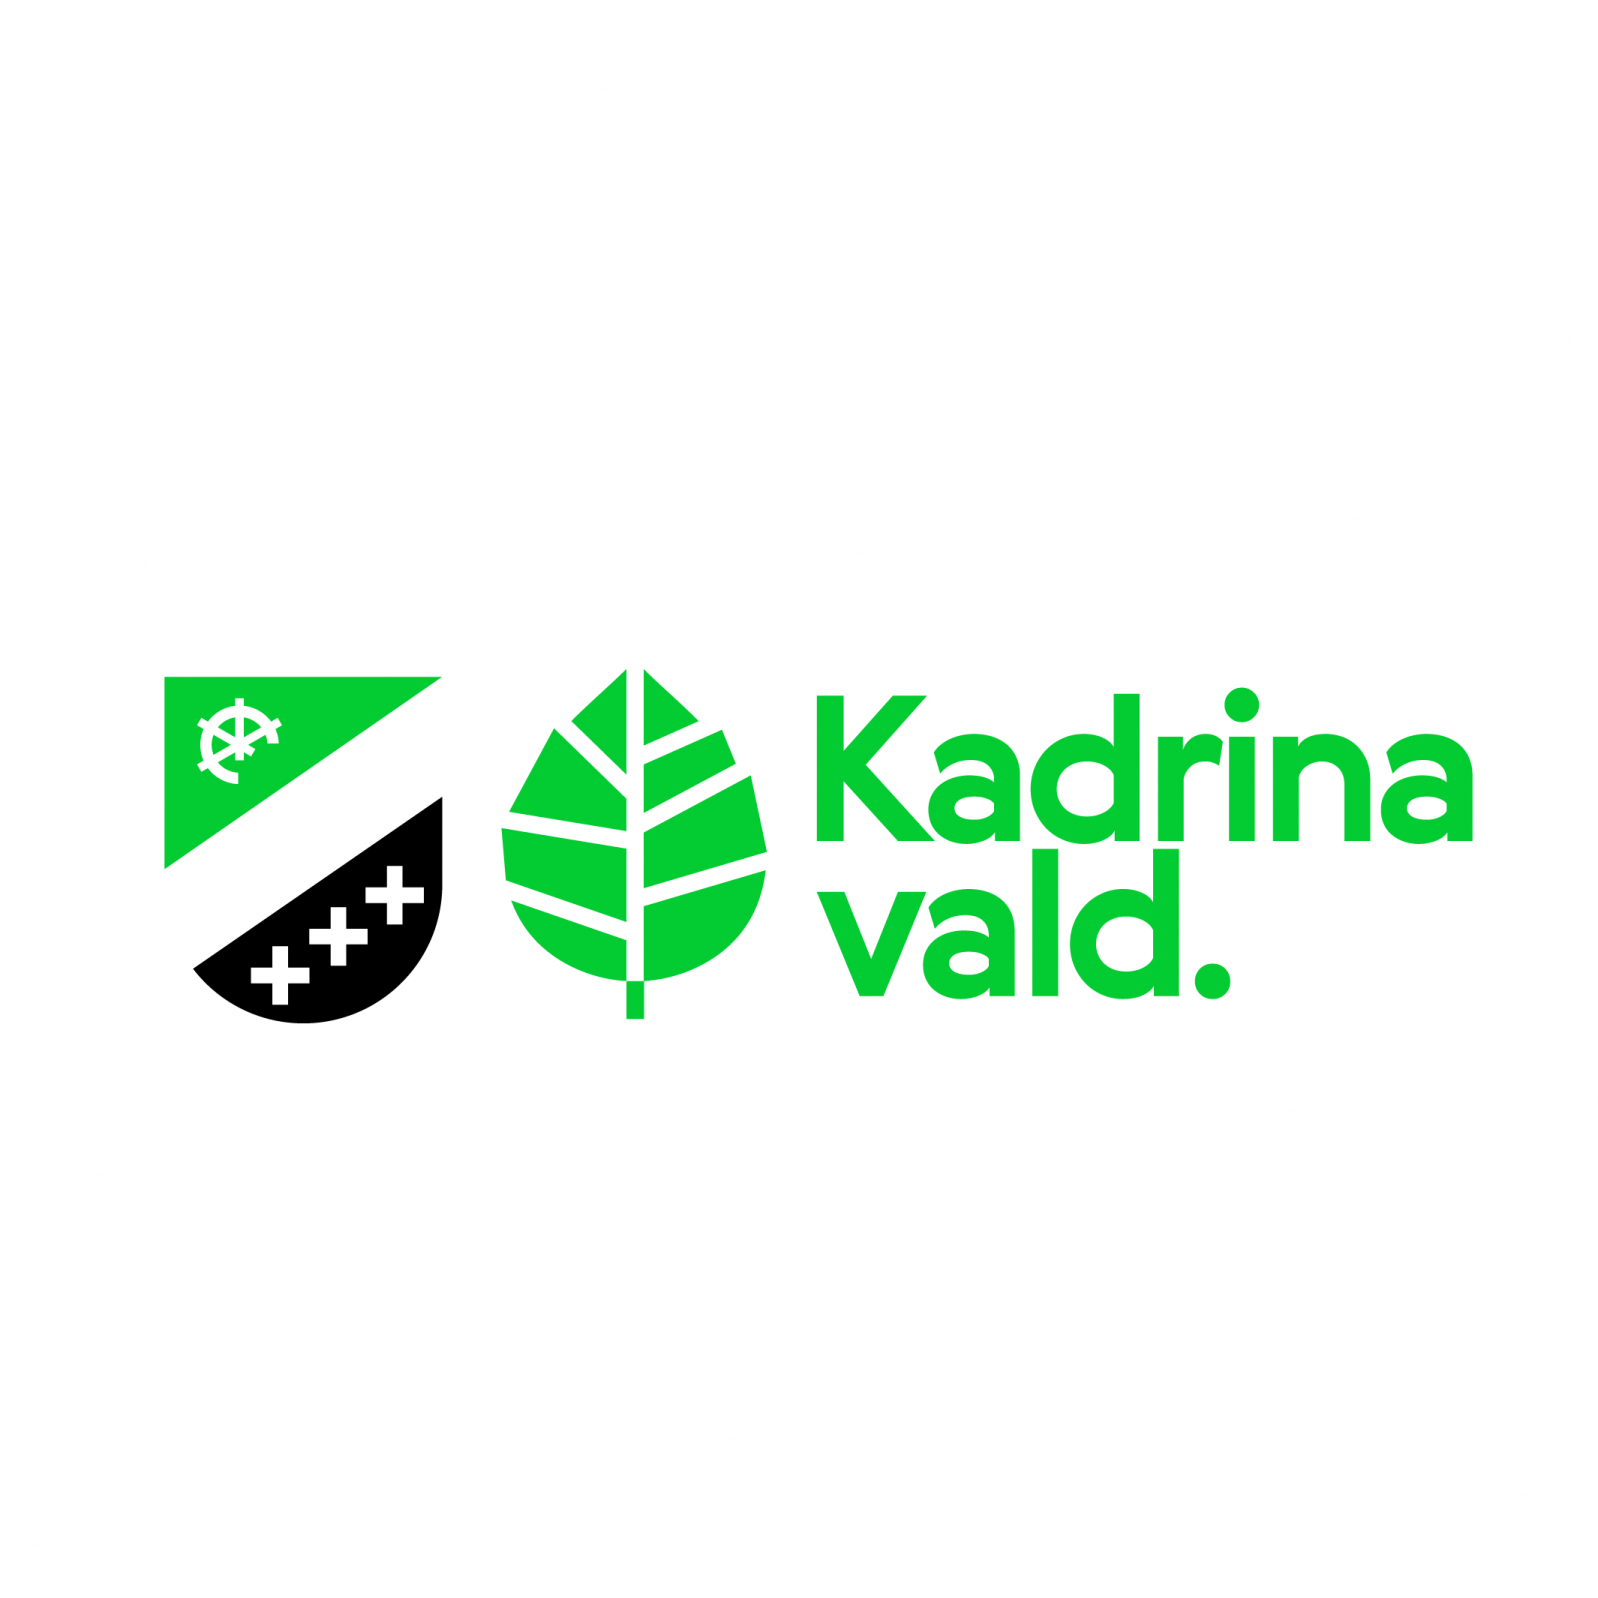 KADRINA HOOLDEKODU OÜ - Residential care activities for the elderly and disabled in Estonia